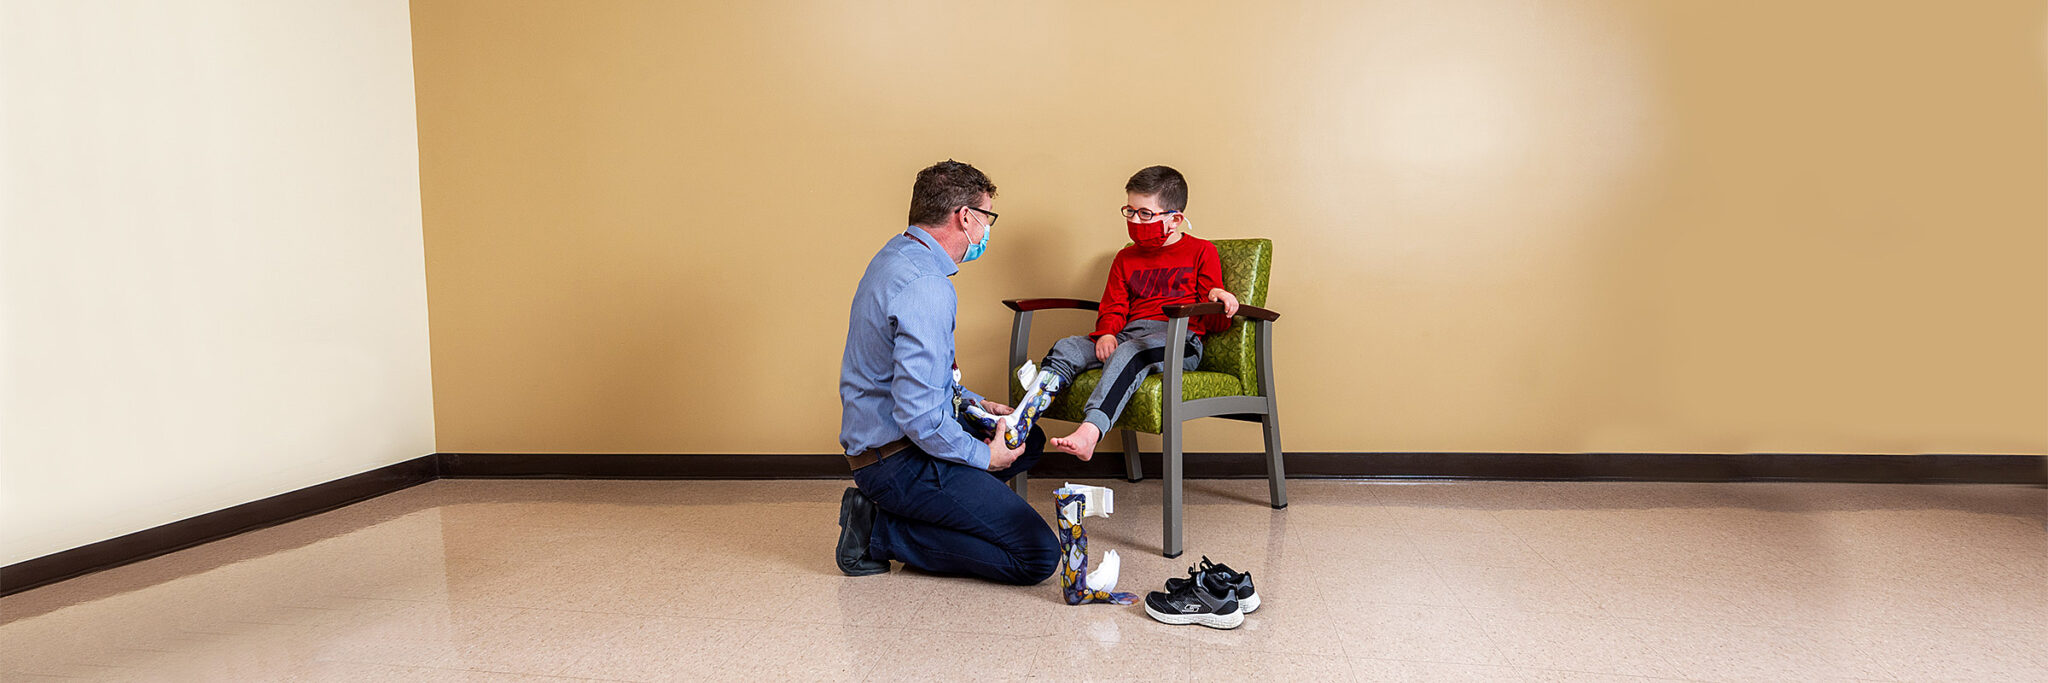 Prosthetist fitting prosthetic leg onto boy